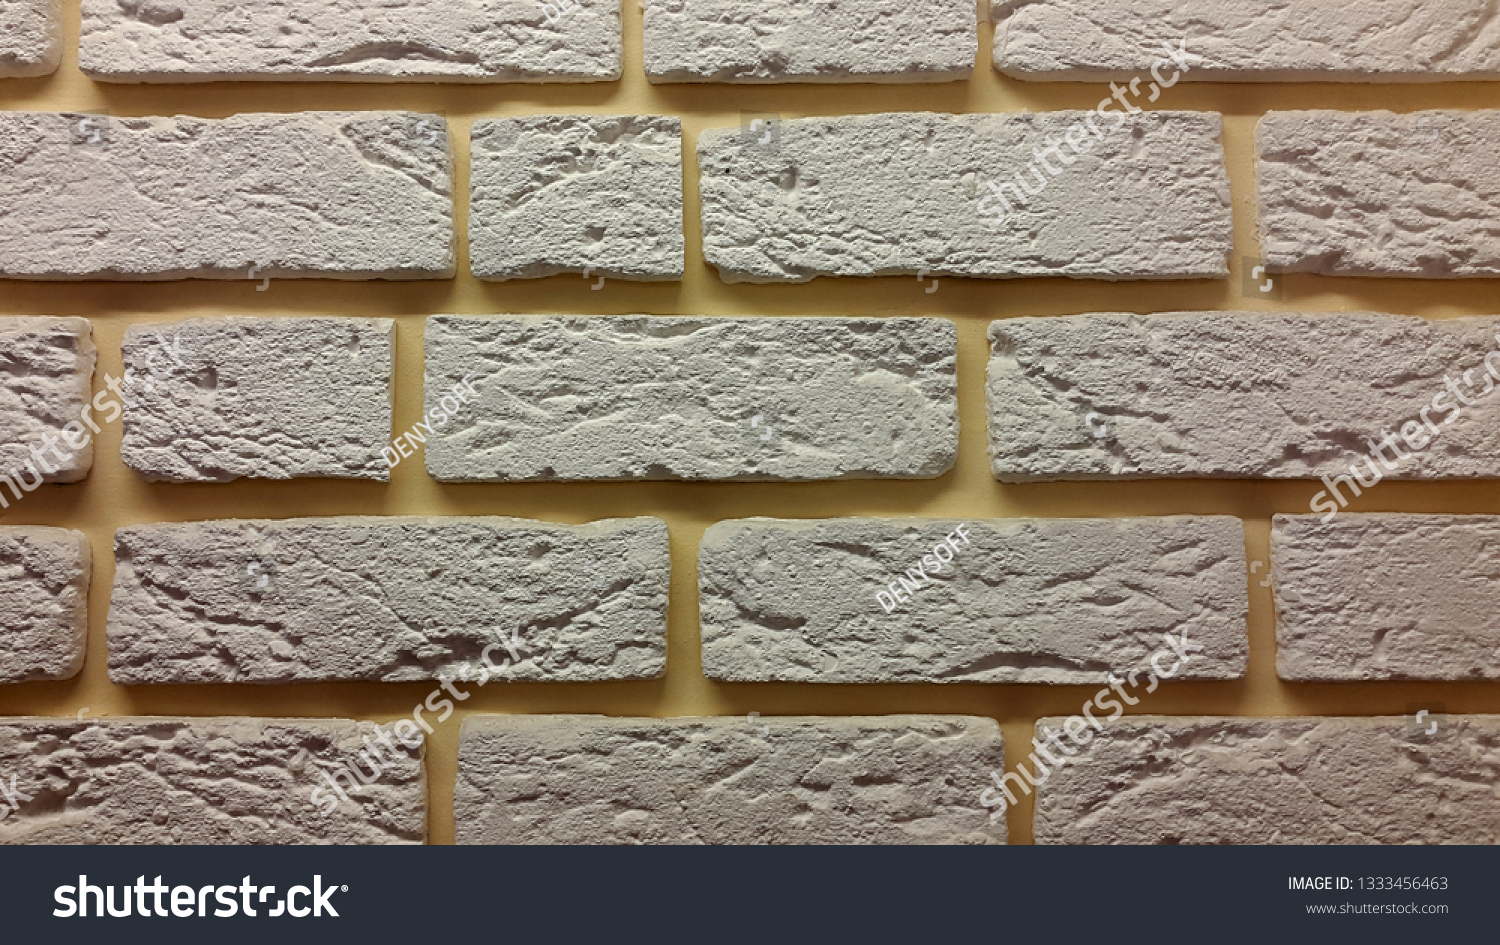 Decorative bricks. Decorative wall sandstone #1333456463